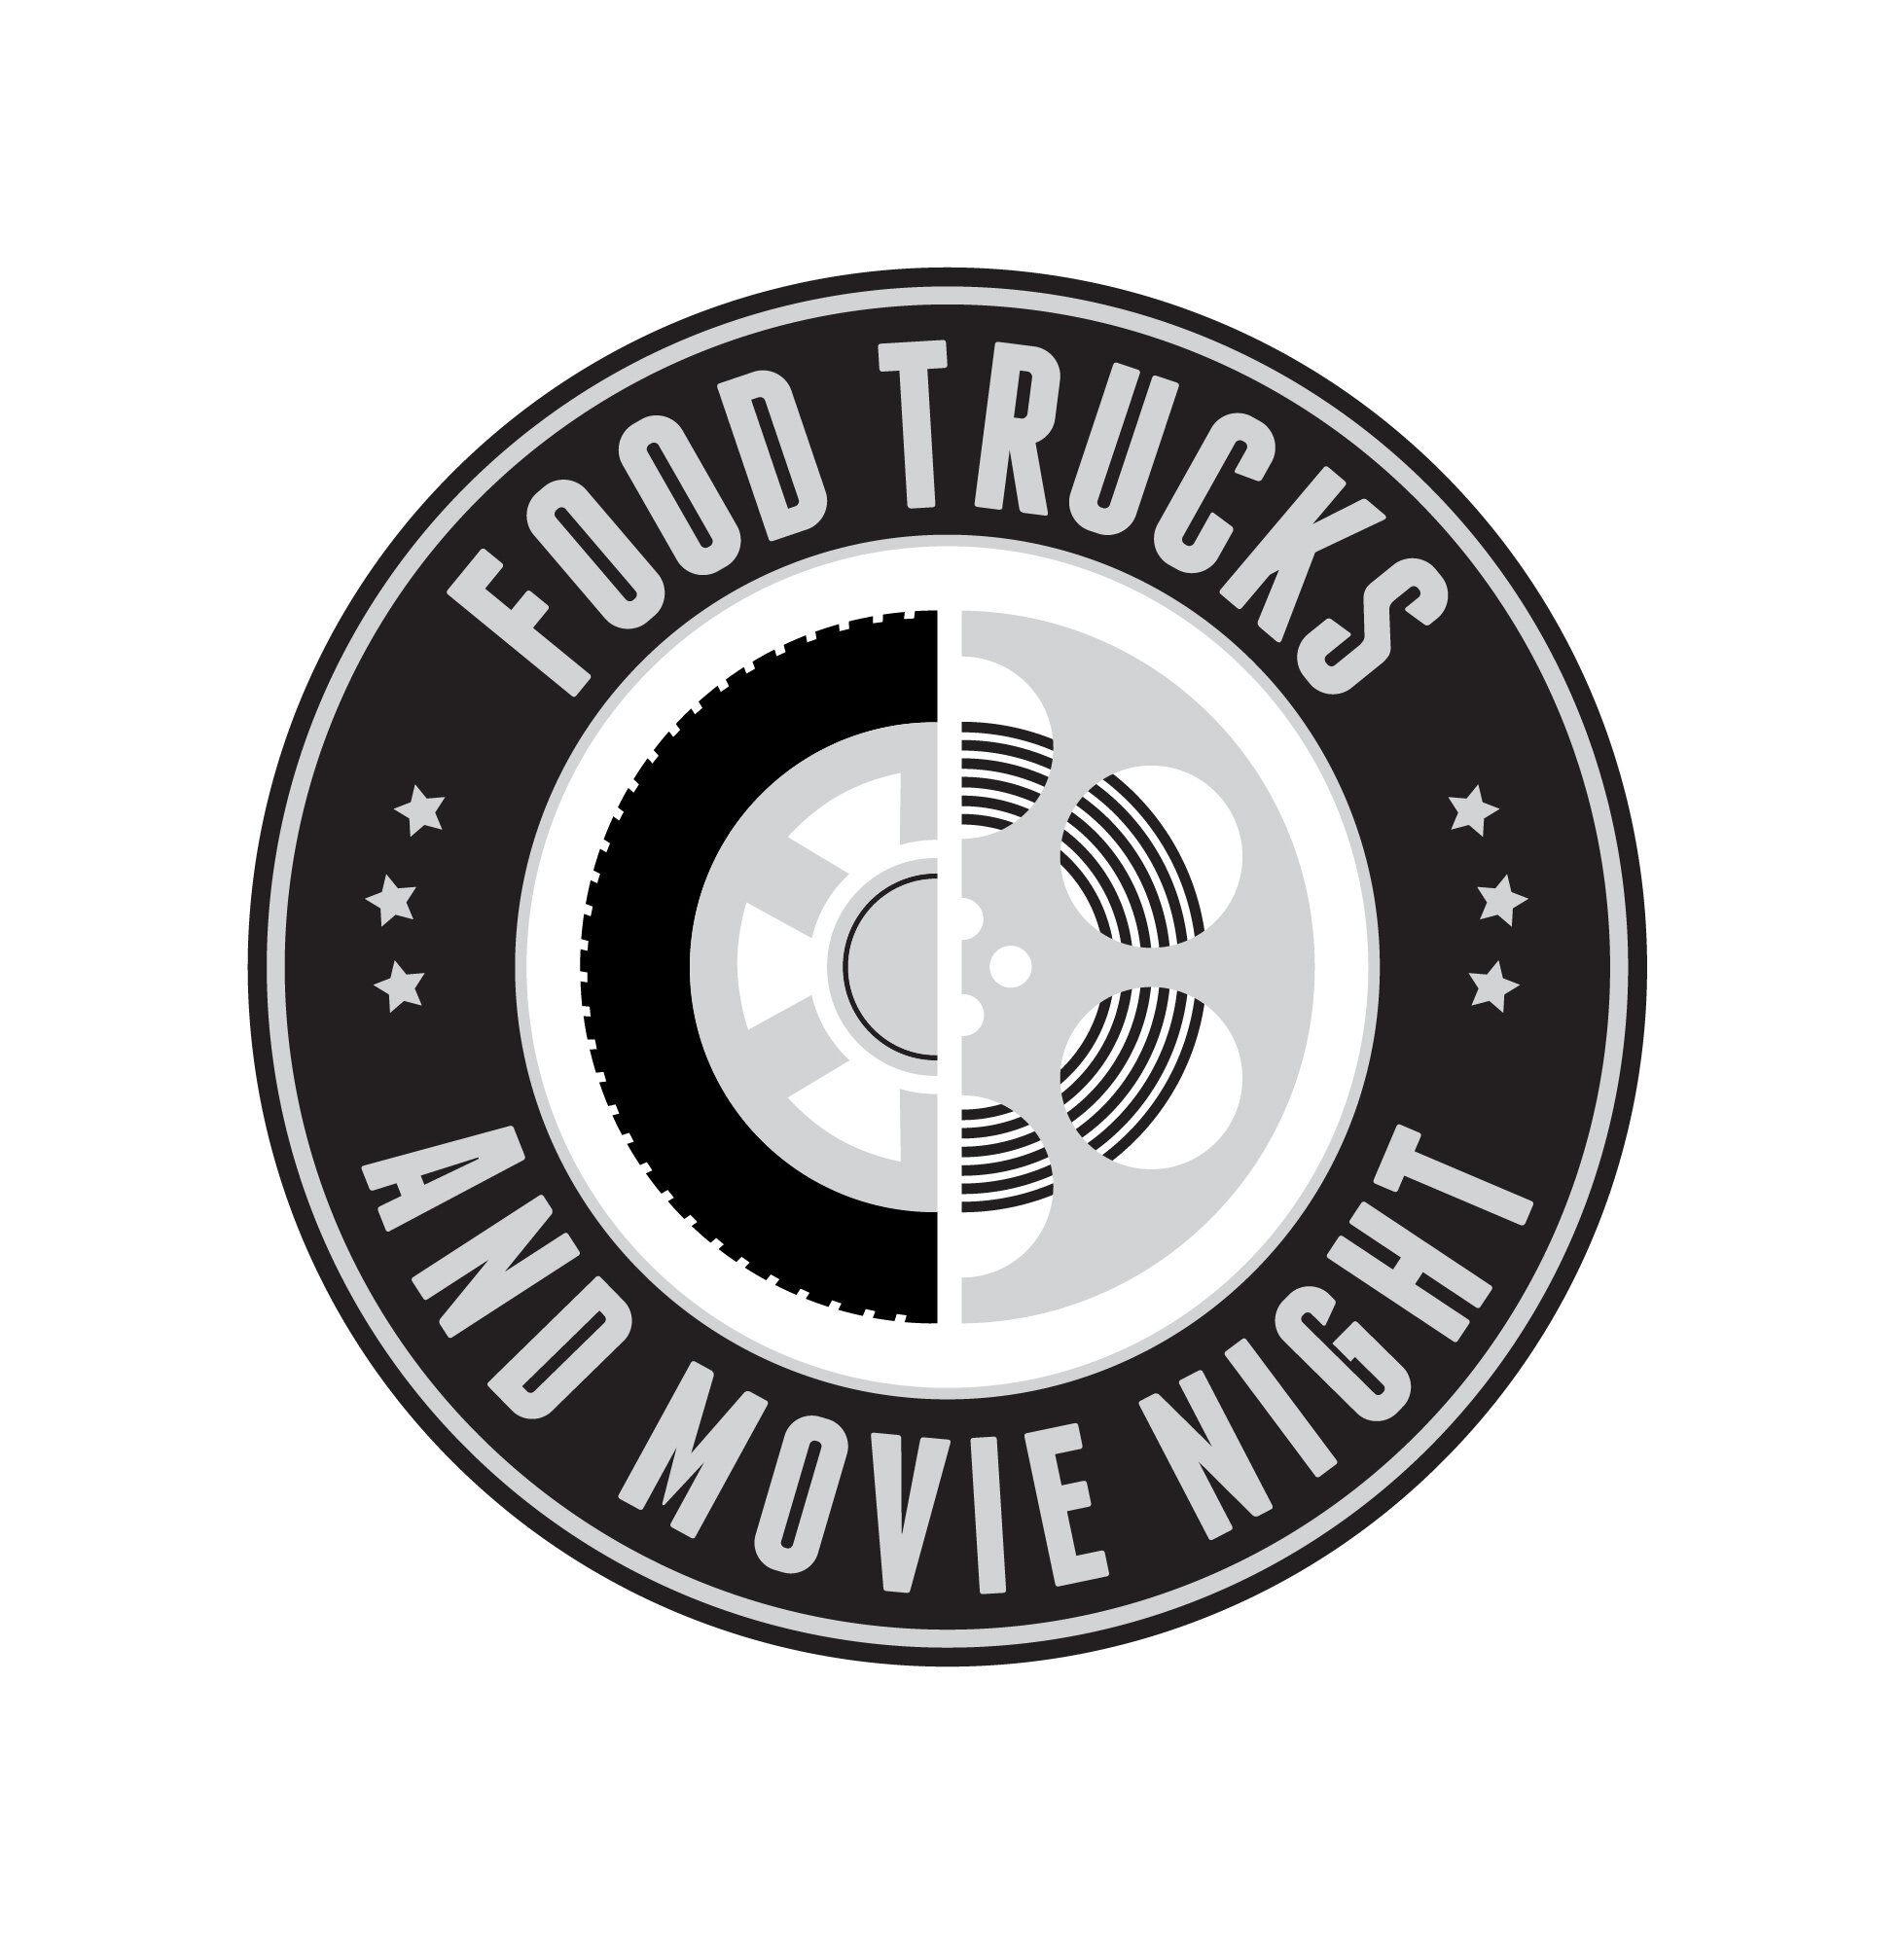 food_truck_movie_night_logo_web-01.jpg